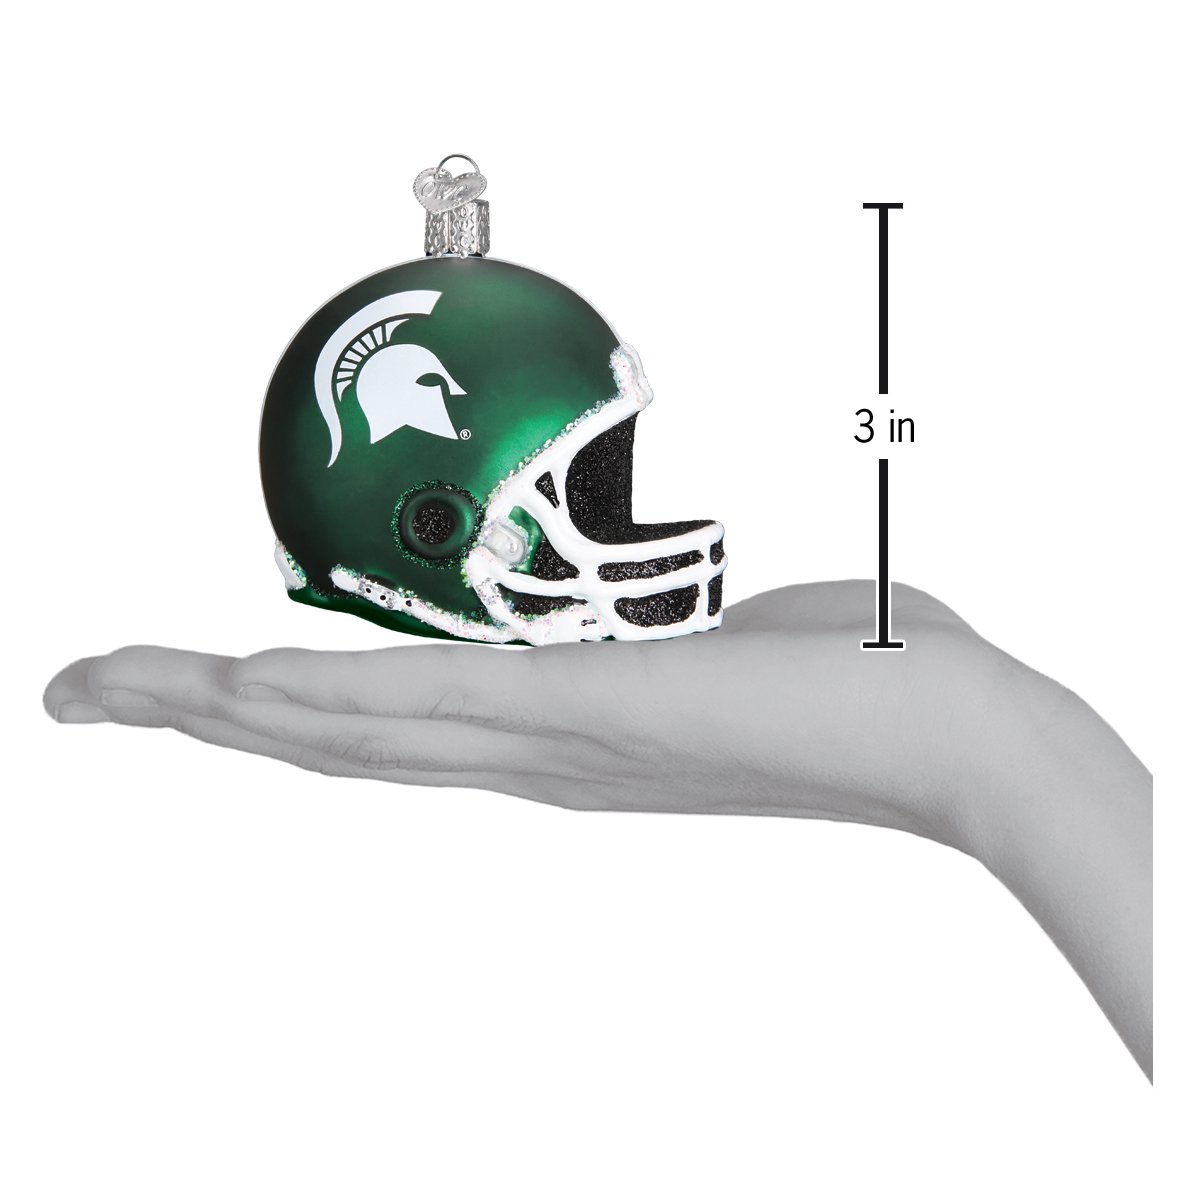 Michigan State Helmet